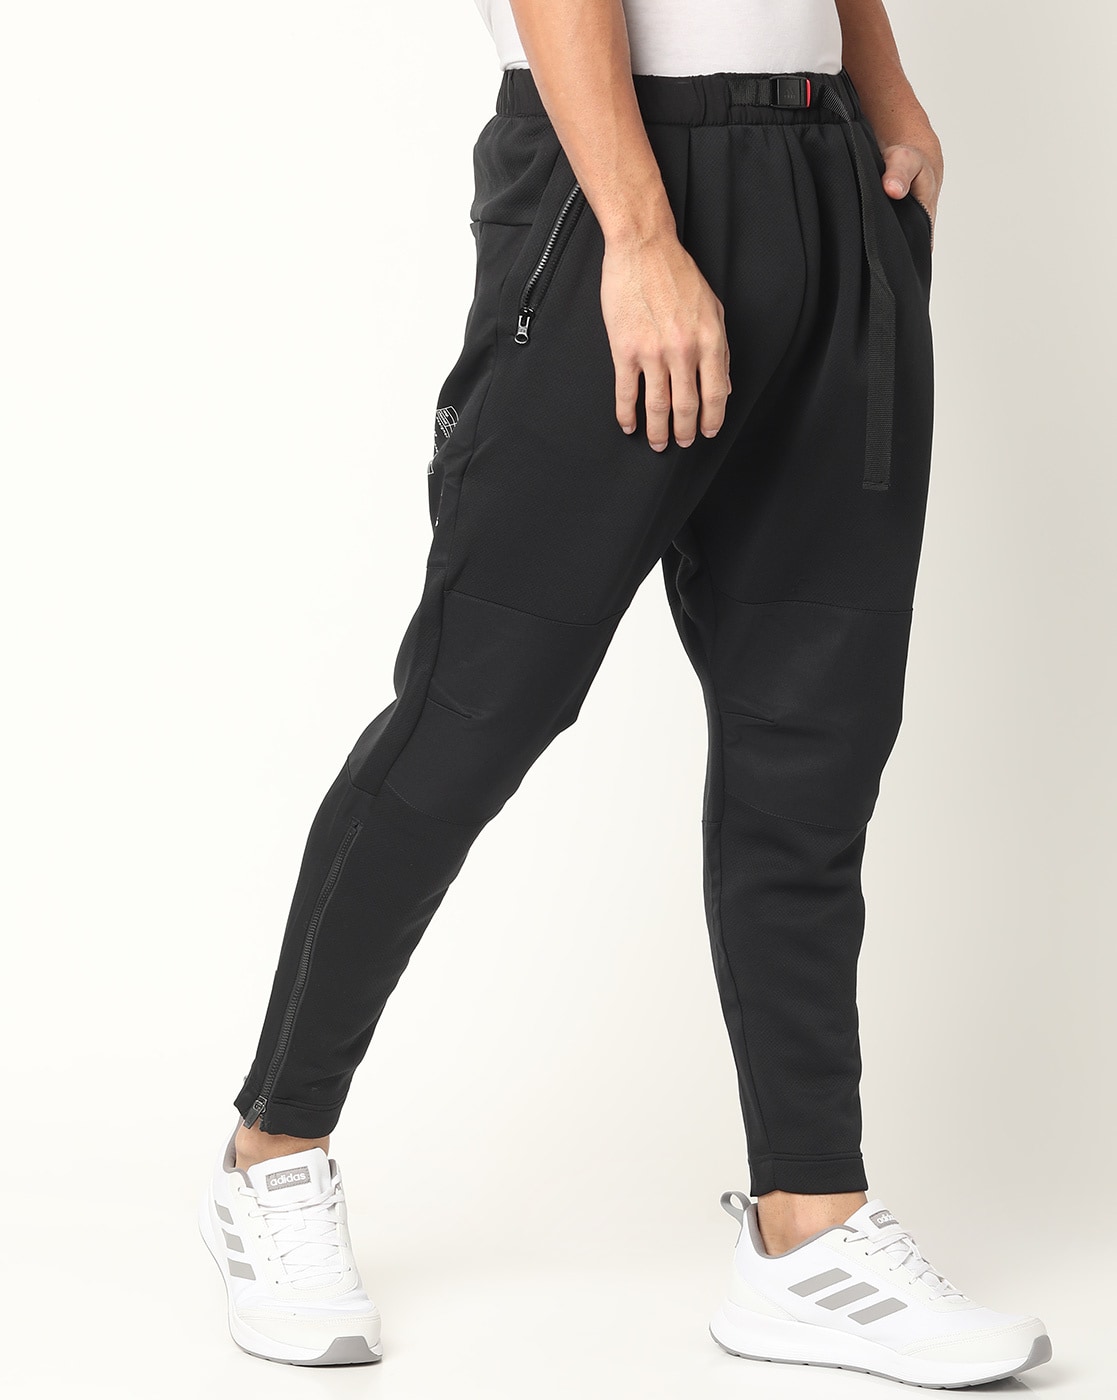 adidas | Pants | Adidas Mens M Workout Pants Black With Zip Pockets And  Zipper On Bottom | Poshmark